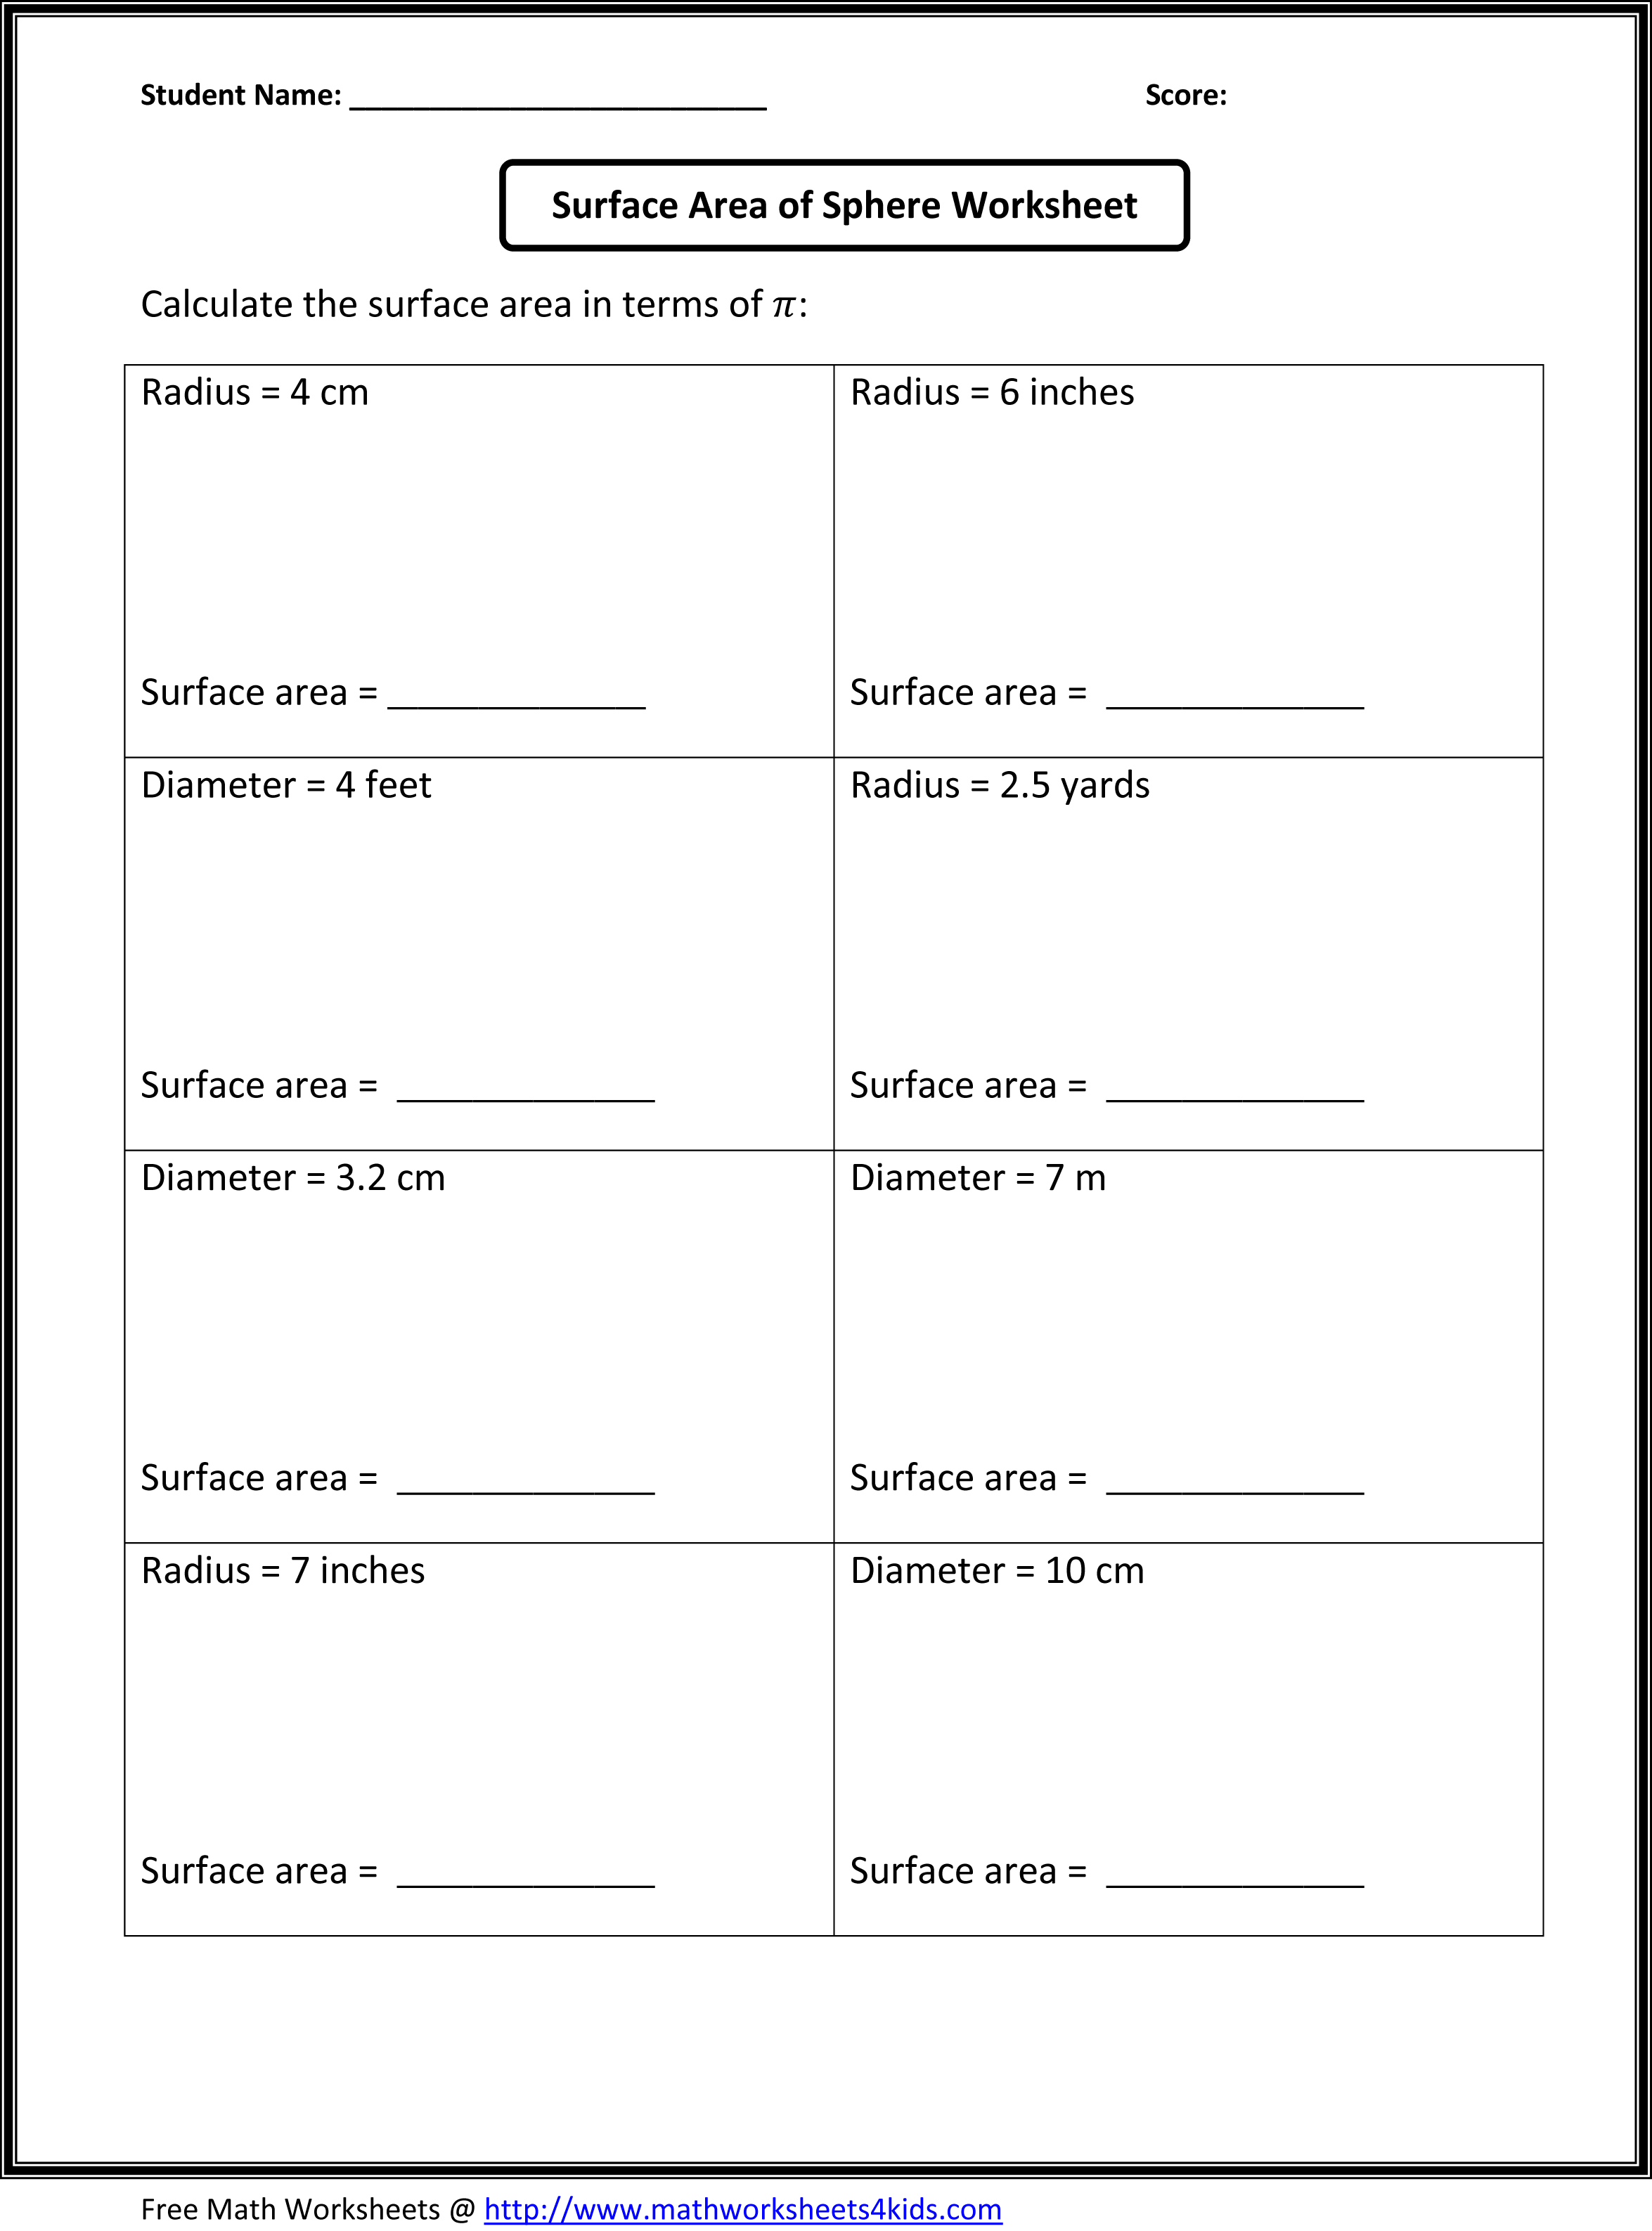 8th Grade Math Practice Worksheets Image